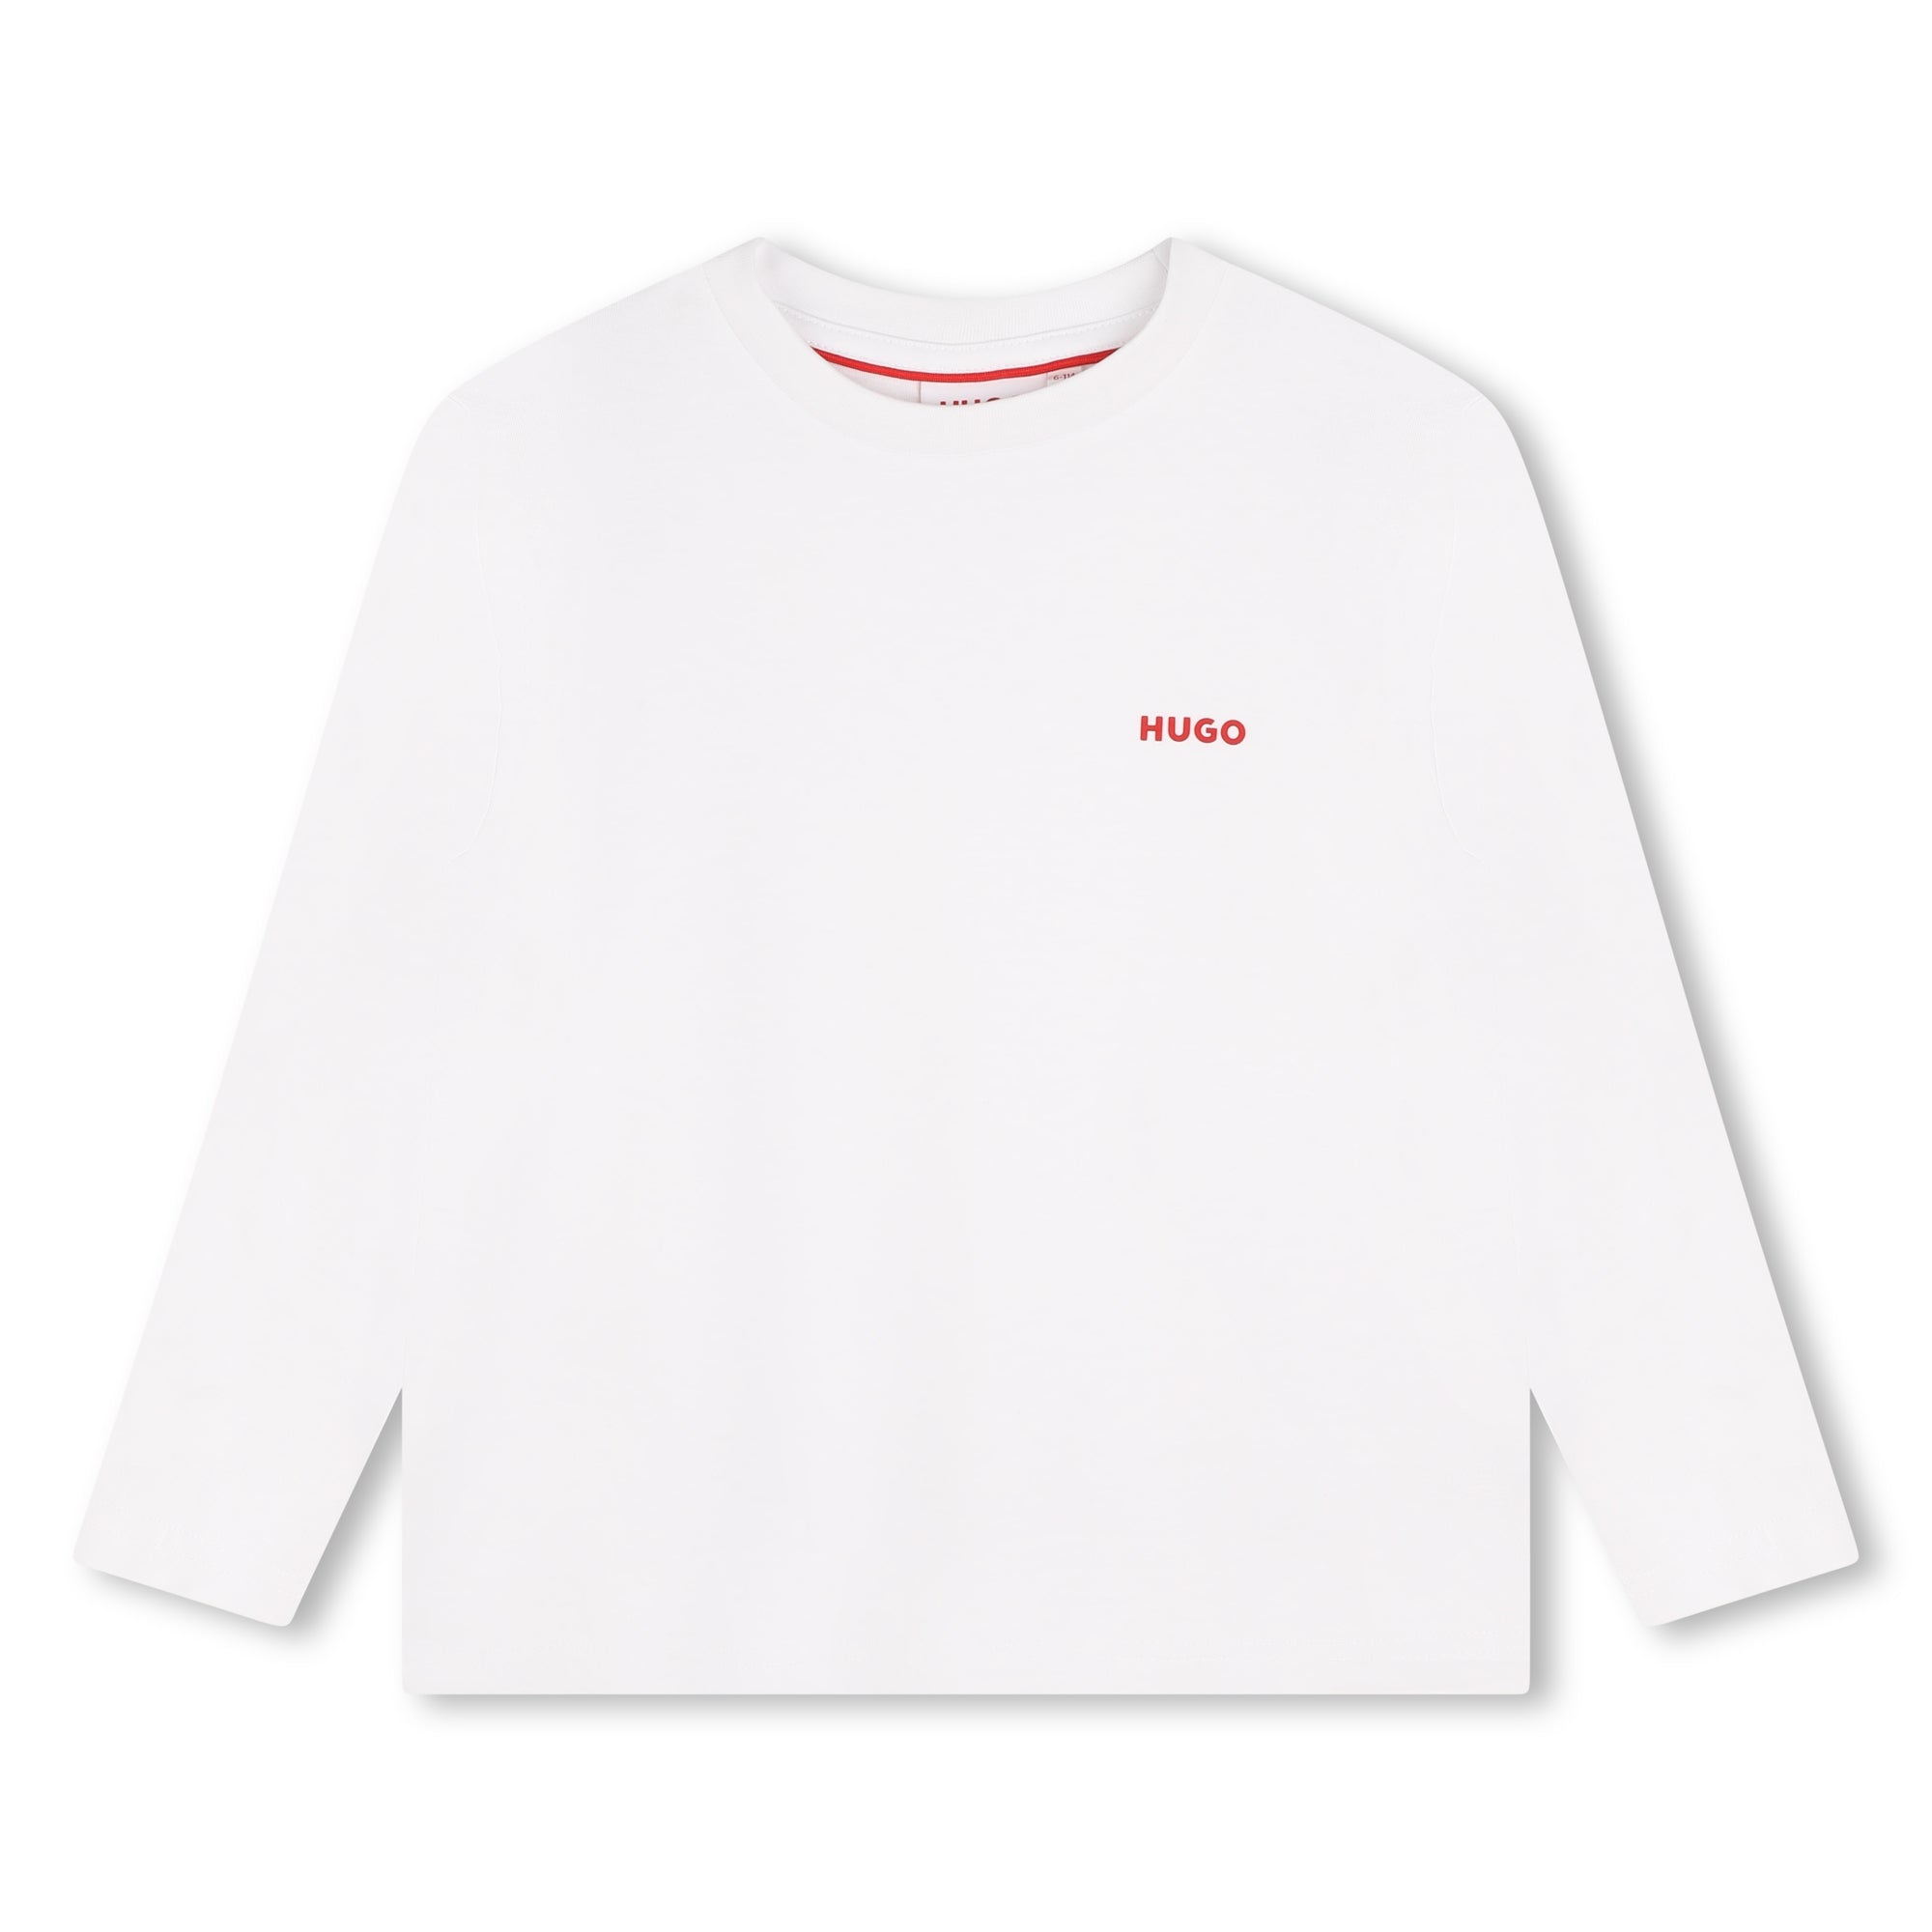 Hugo Long Sleeve T-Shirt Style: G25133